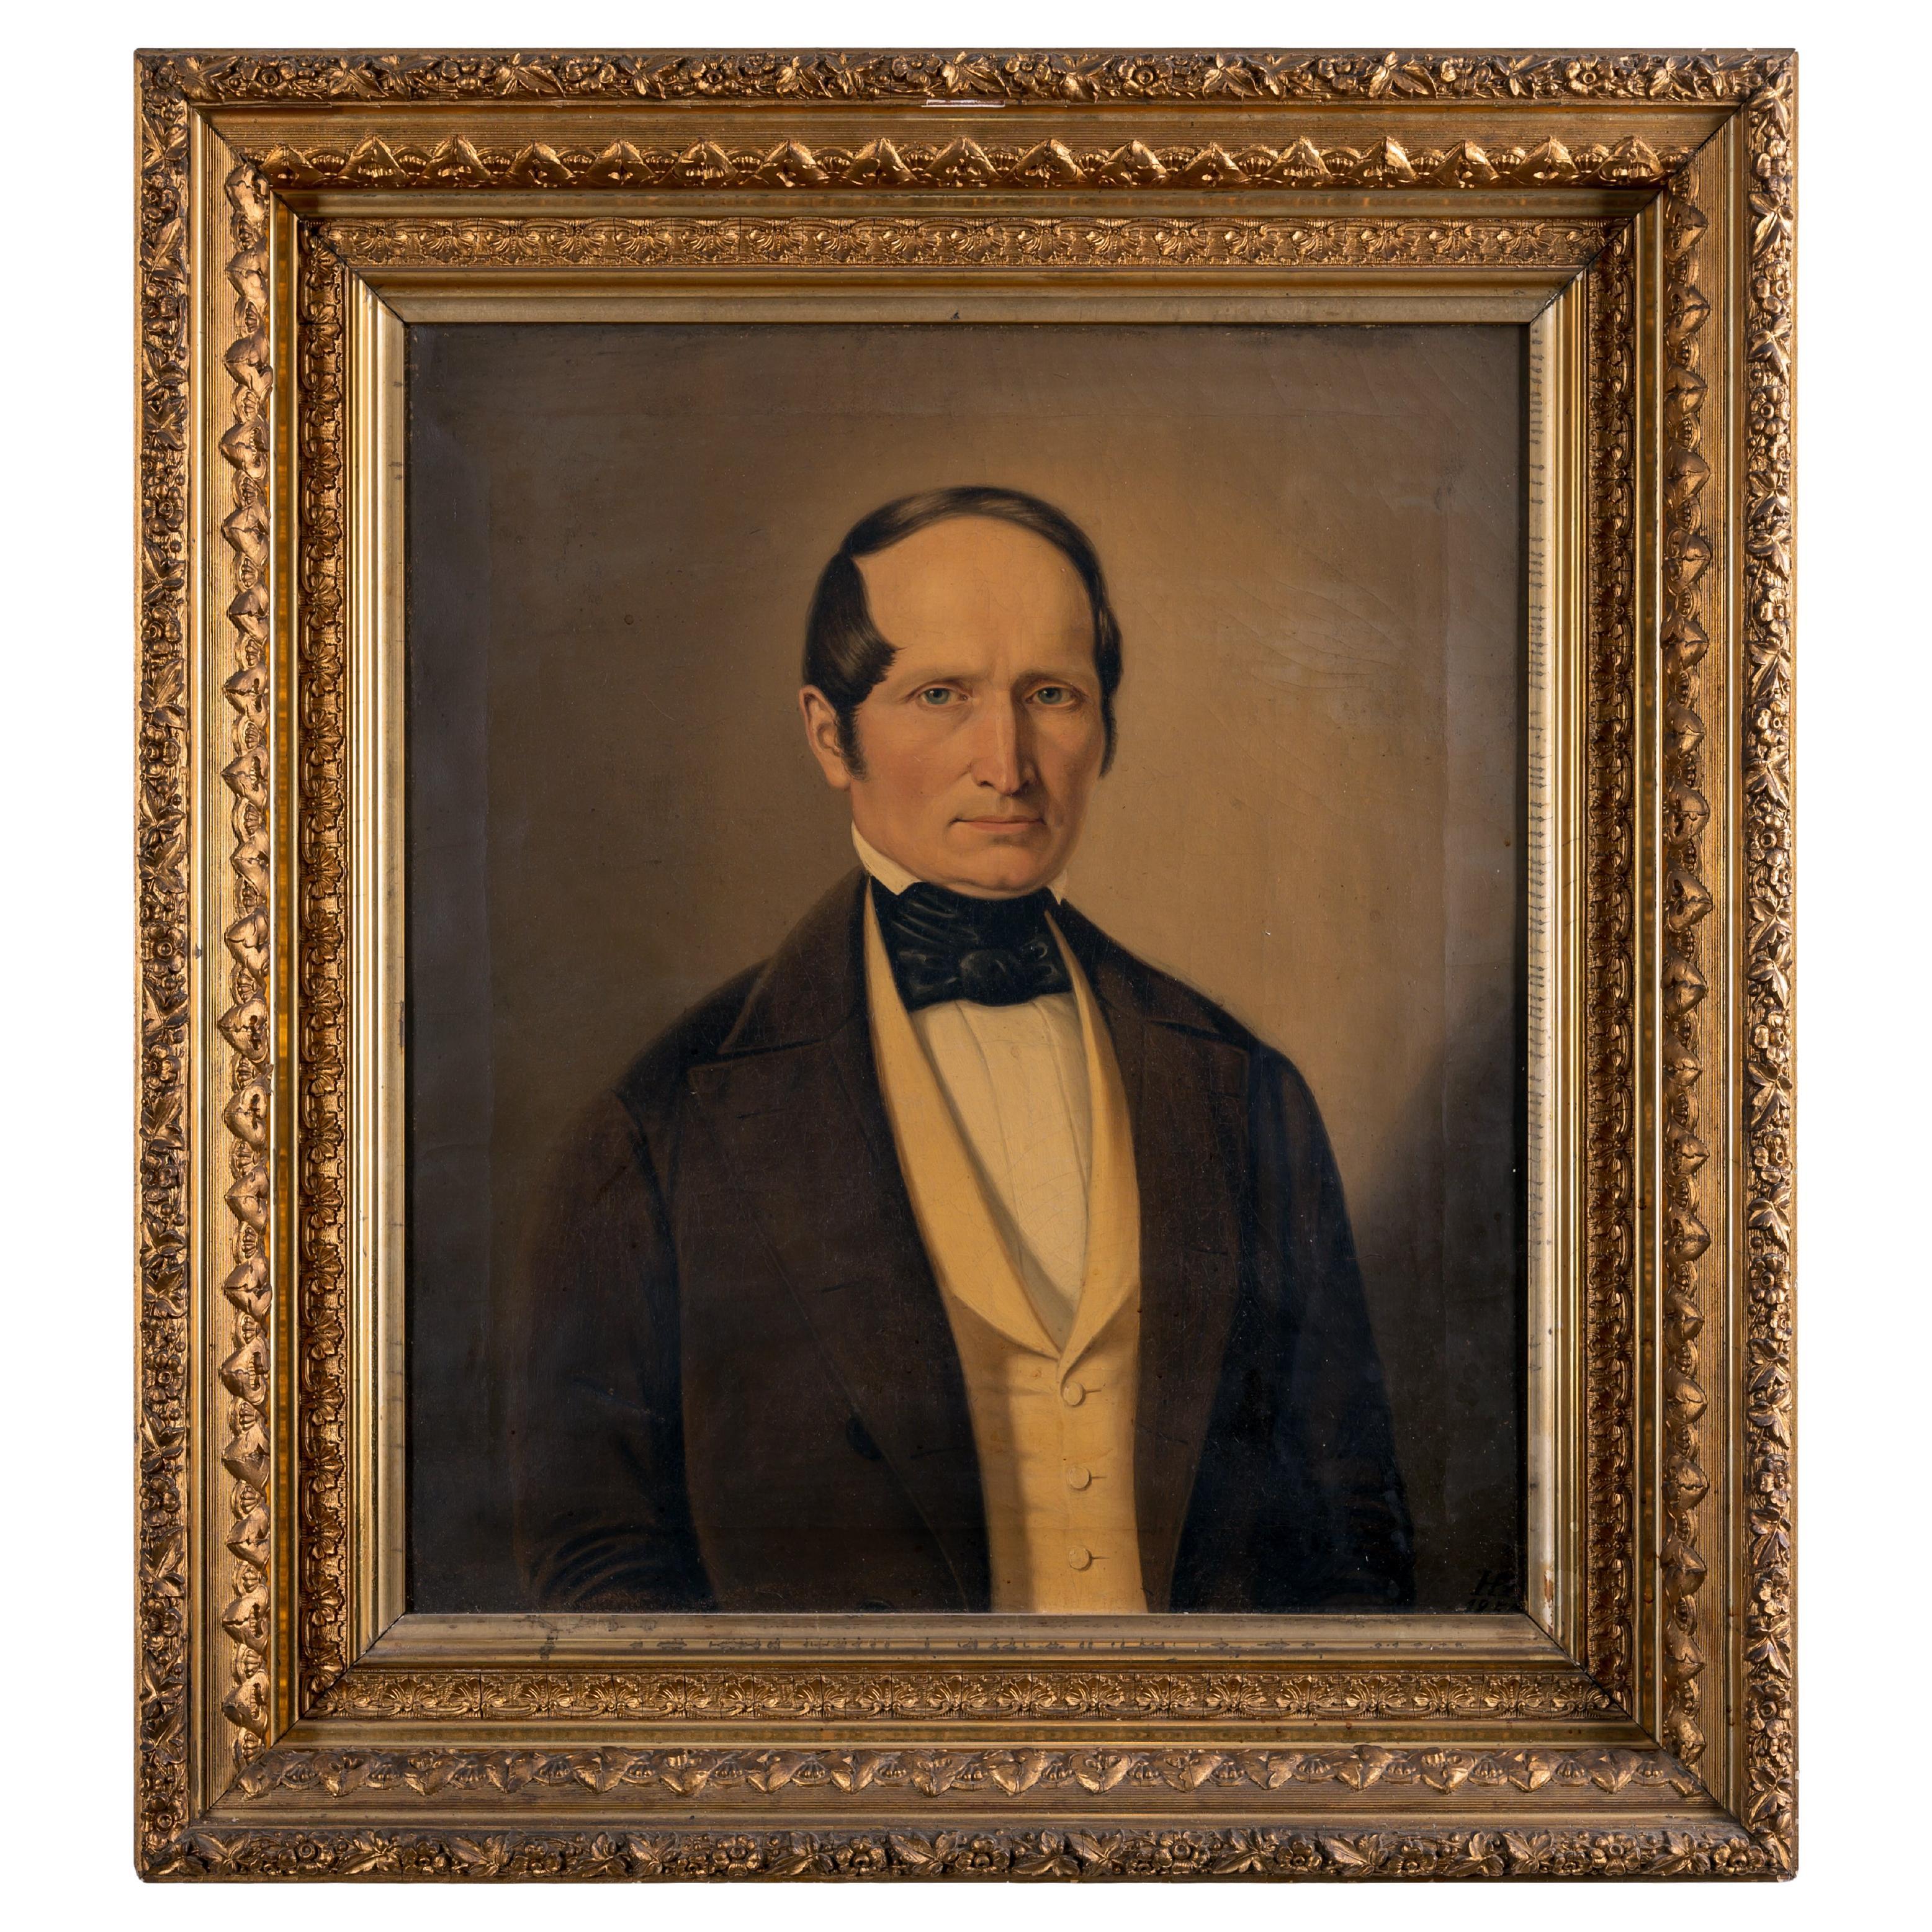 New England Gentleman Portrait Painting, 1854